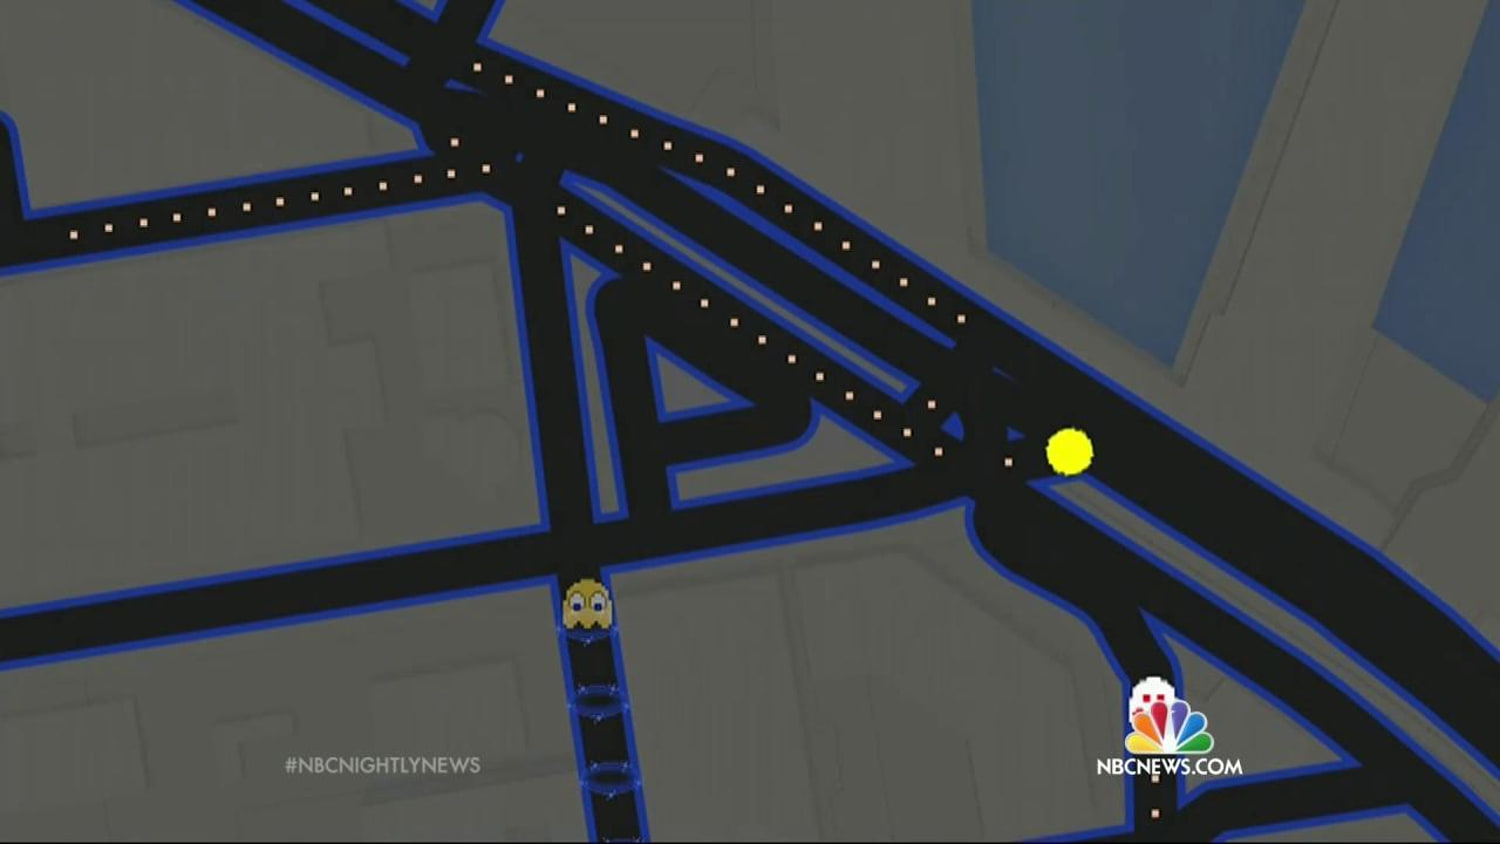 Real Los Angeles Pause menu Map (IOS Plans Style) + Lore-Friendly - GTA5 -Mods.com